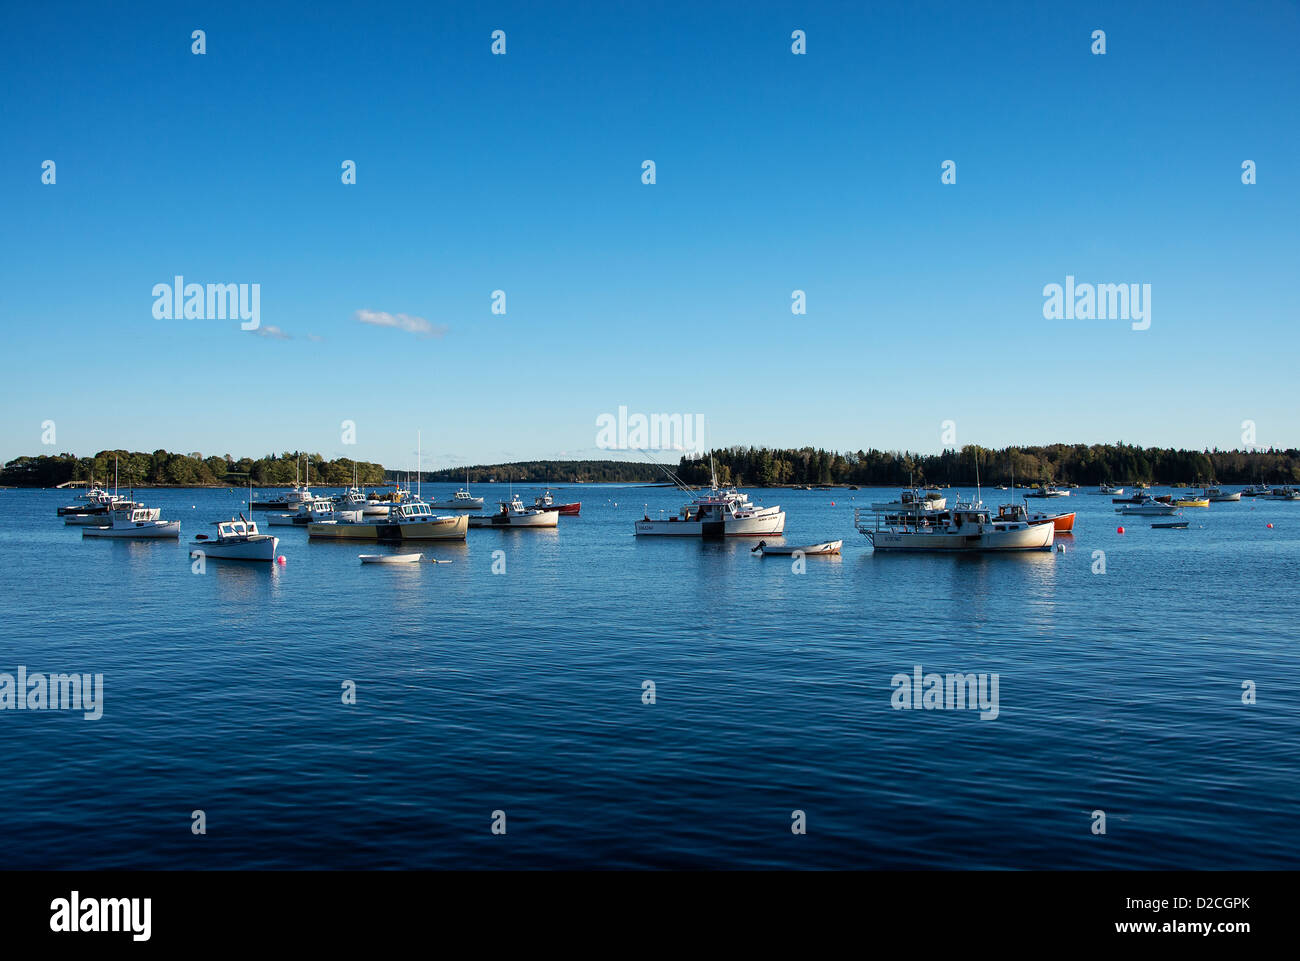 Quaint fishing village, Friendship, Maine, USA Stock Photo